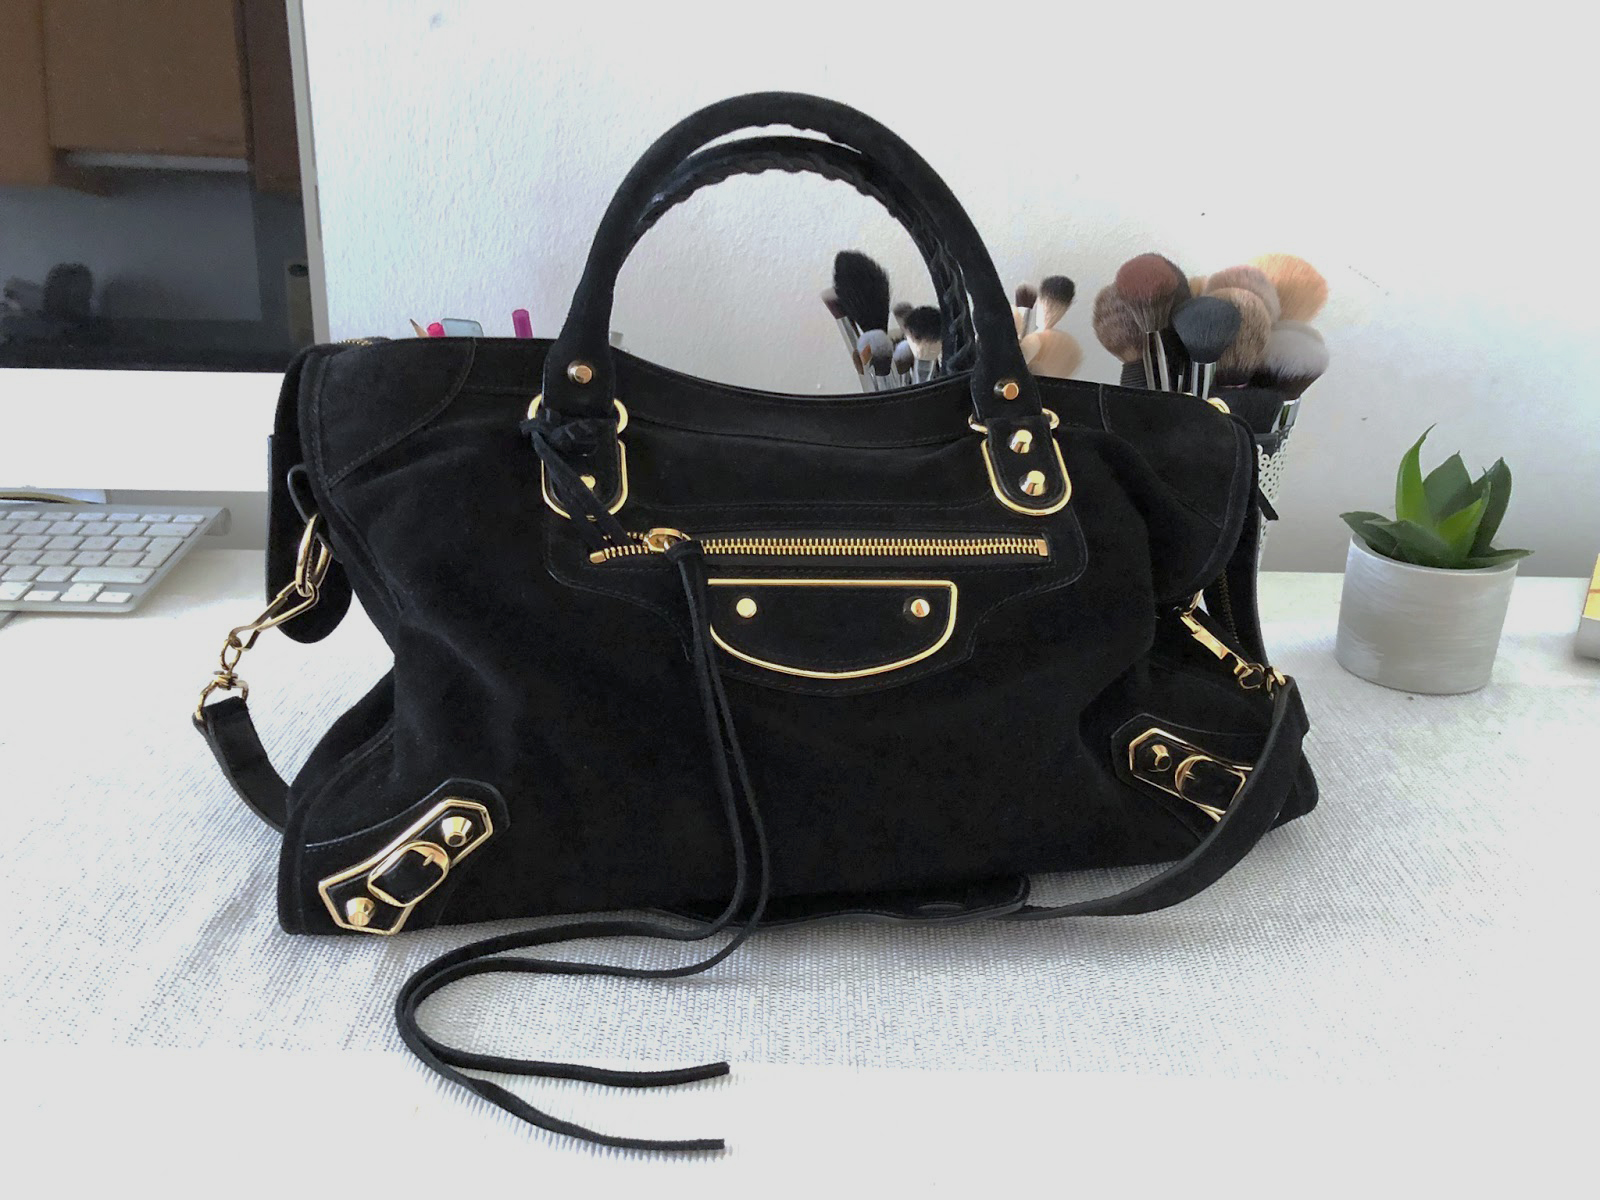 Luxury Handbag Regret?? Things I Don't Like About My Louis Vuitton Speedy B  25 Damier Ebene 